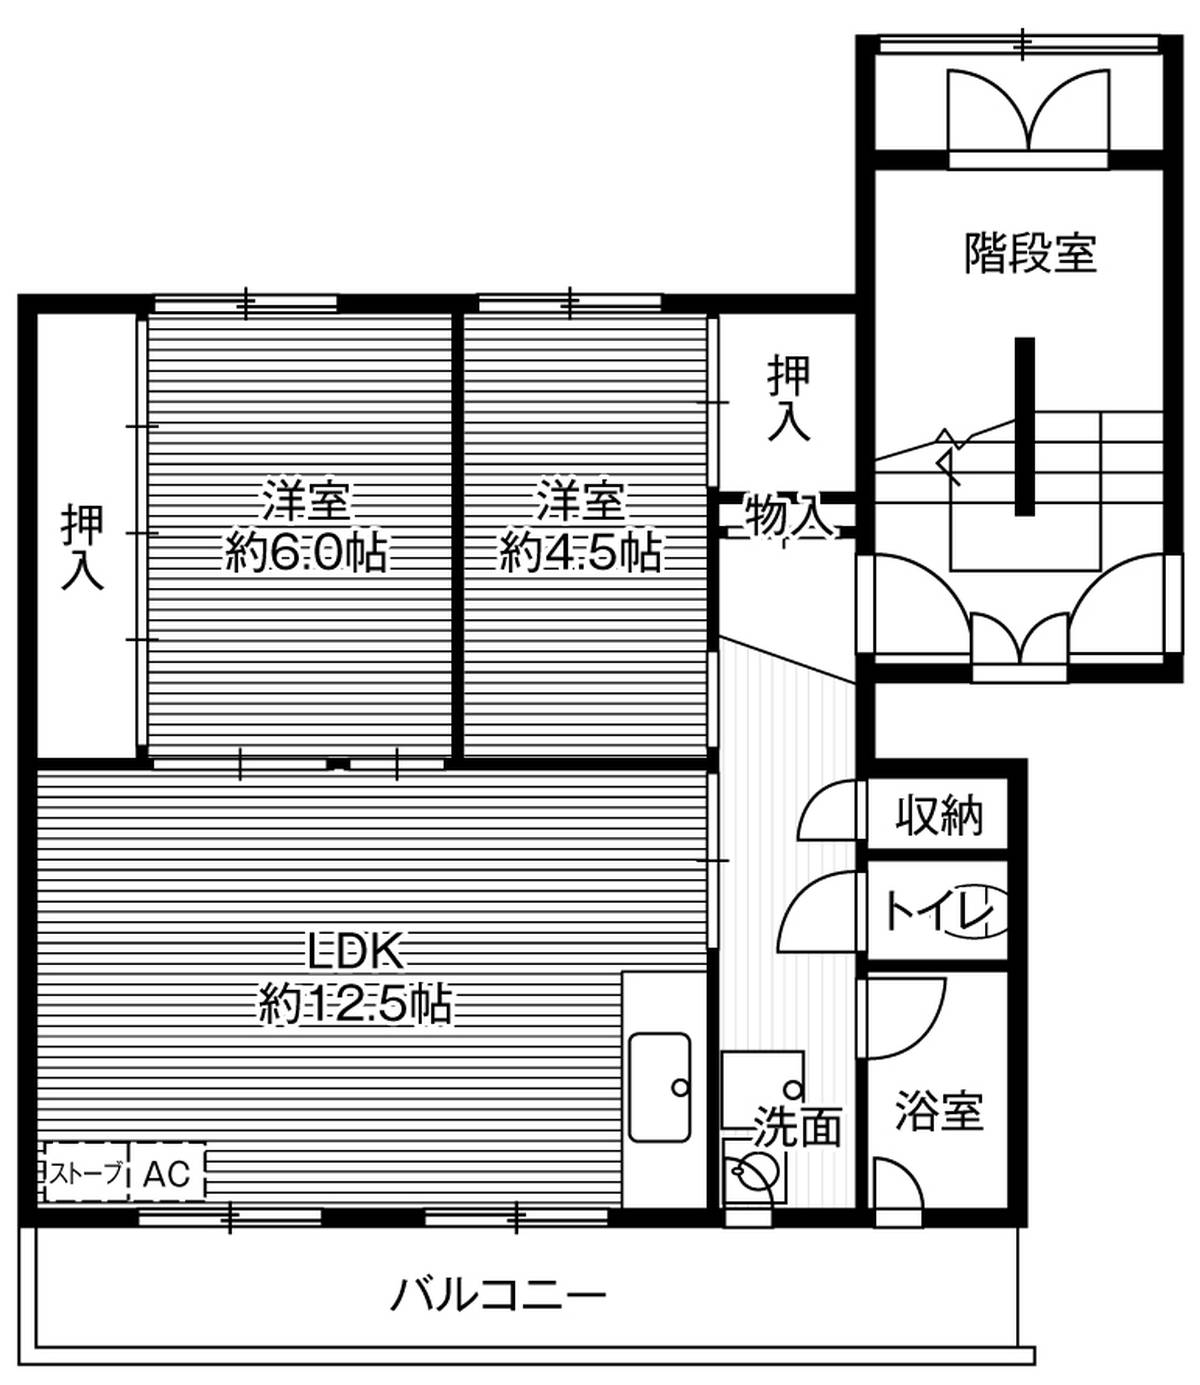 2LDK floorplan of Village House Kawazoe in Minami-ku